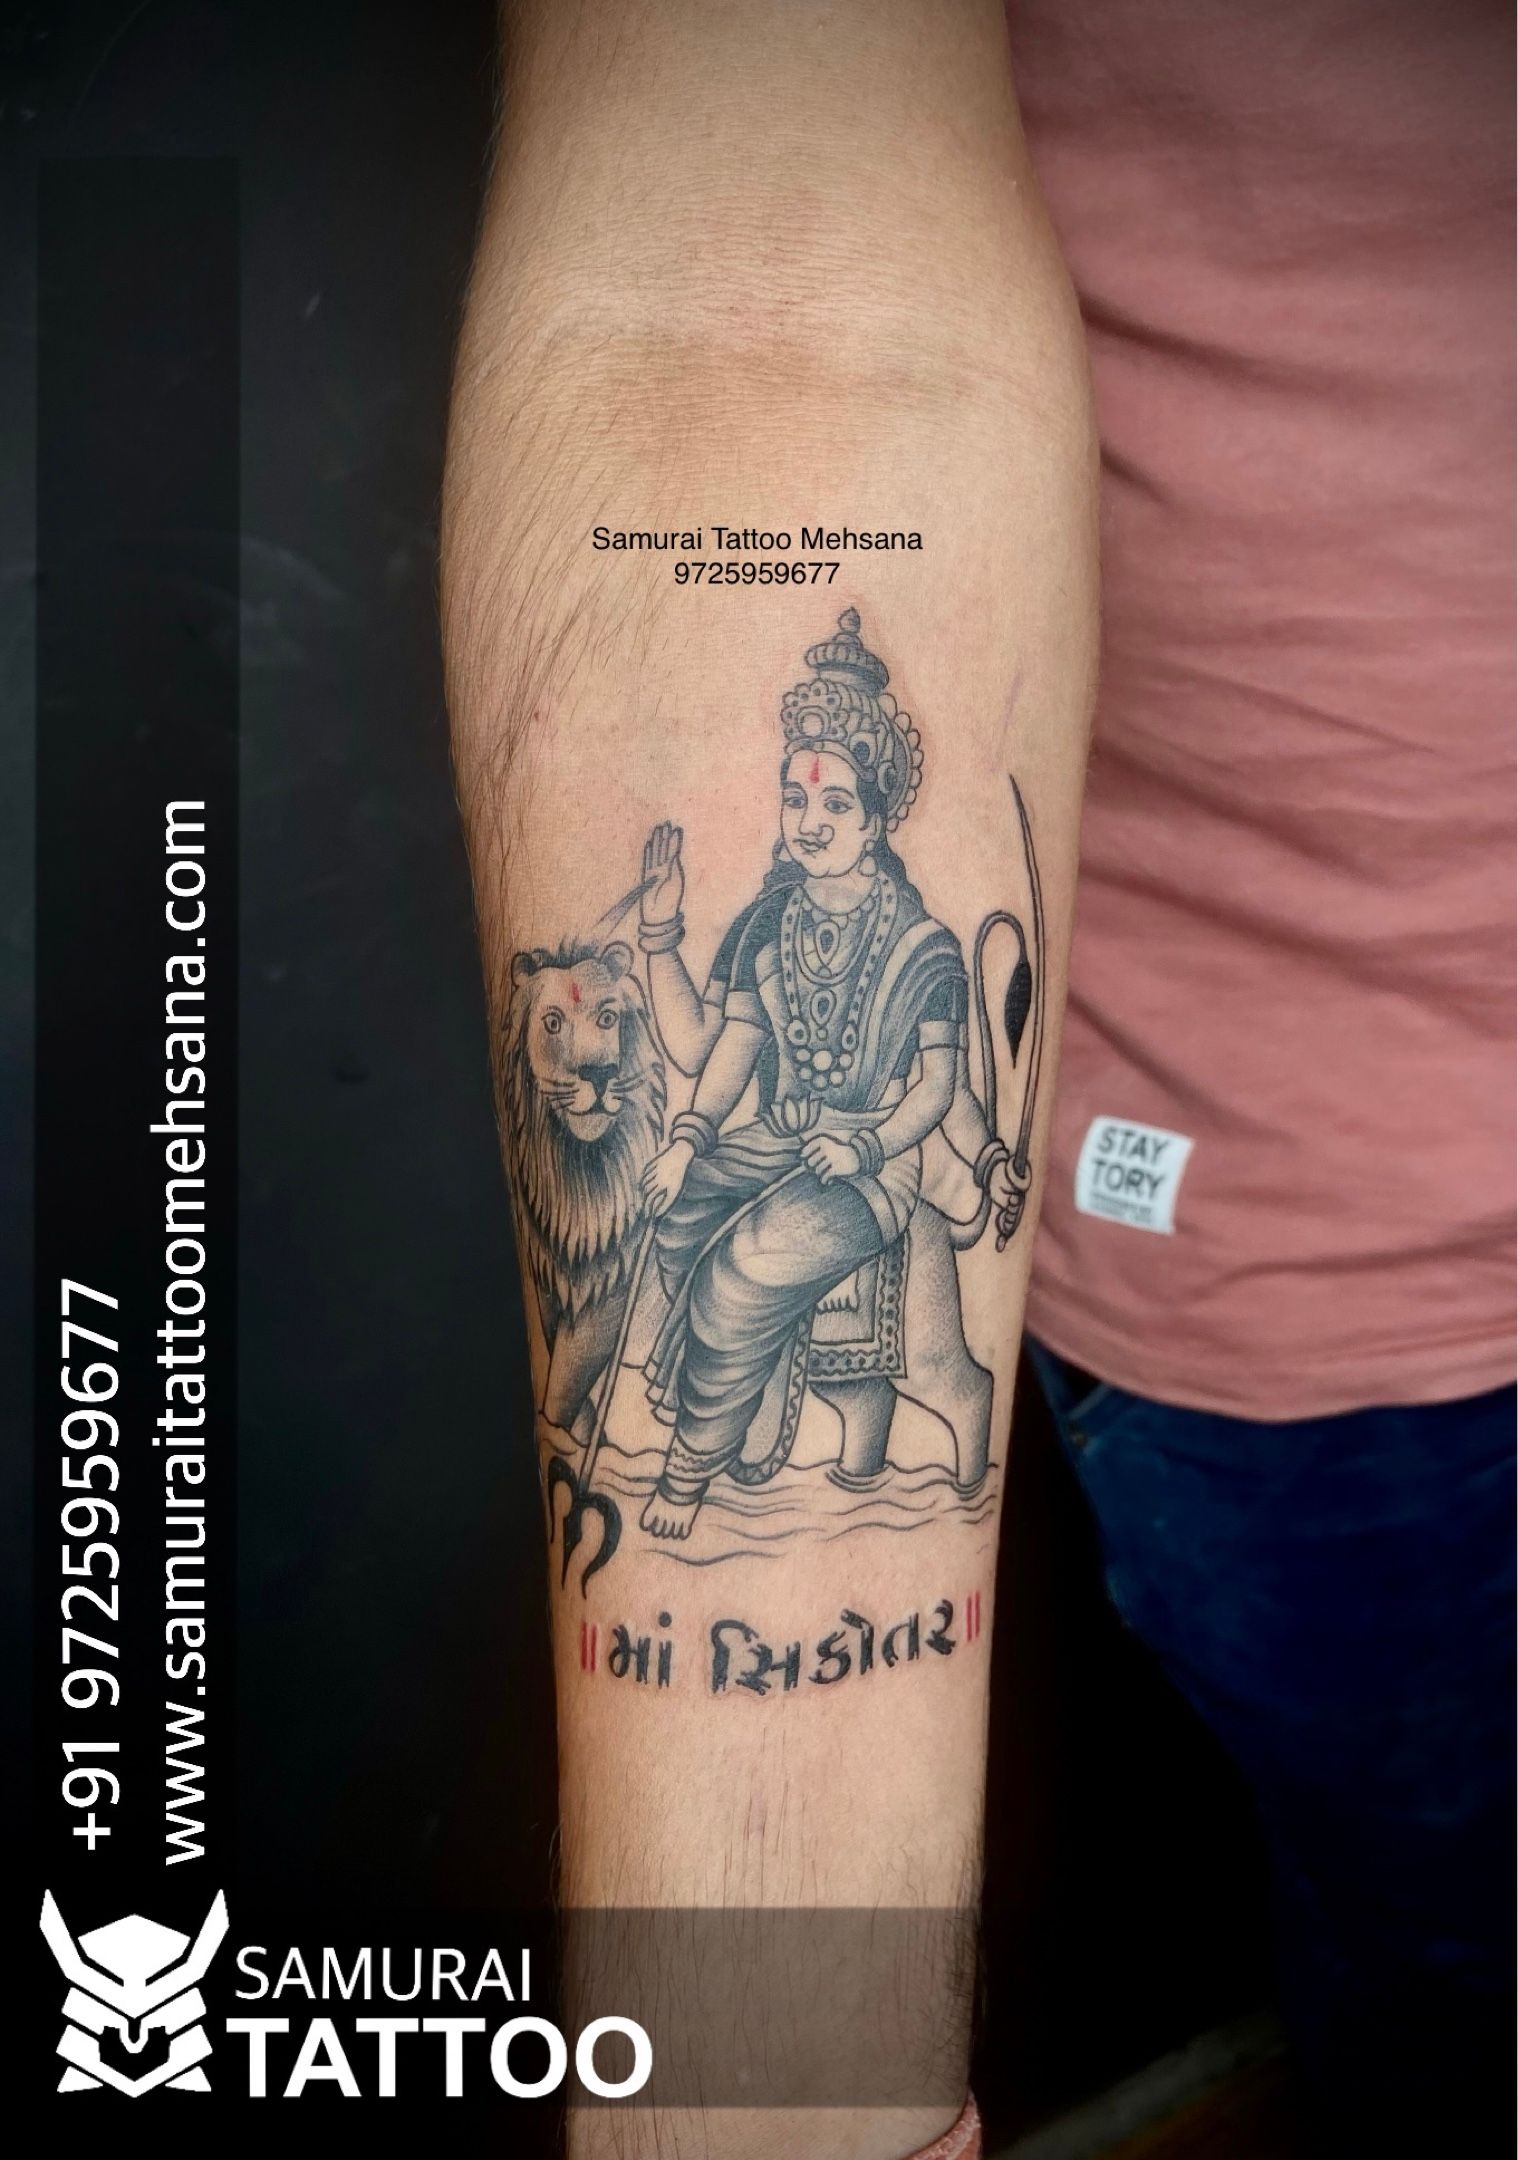 Imperial Tattoo Ahmedabad on Instagram Sikotar tattoo  9998771601  jaysikotarmaa sikotar gujarati gujju like4likes ahmedabadinstagram  instagram follow4followback duets artist rabari bharwad maldhari  duets sikotar nikol naroda 